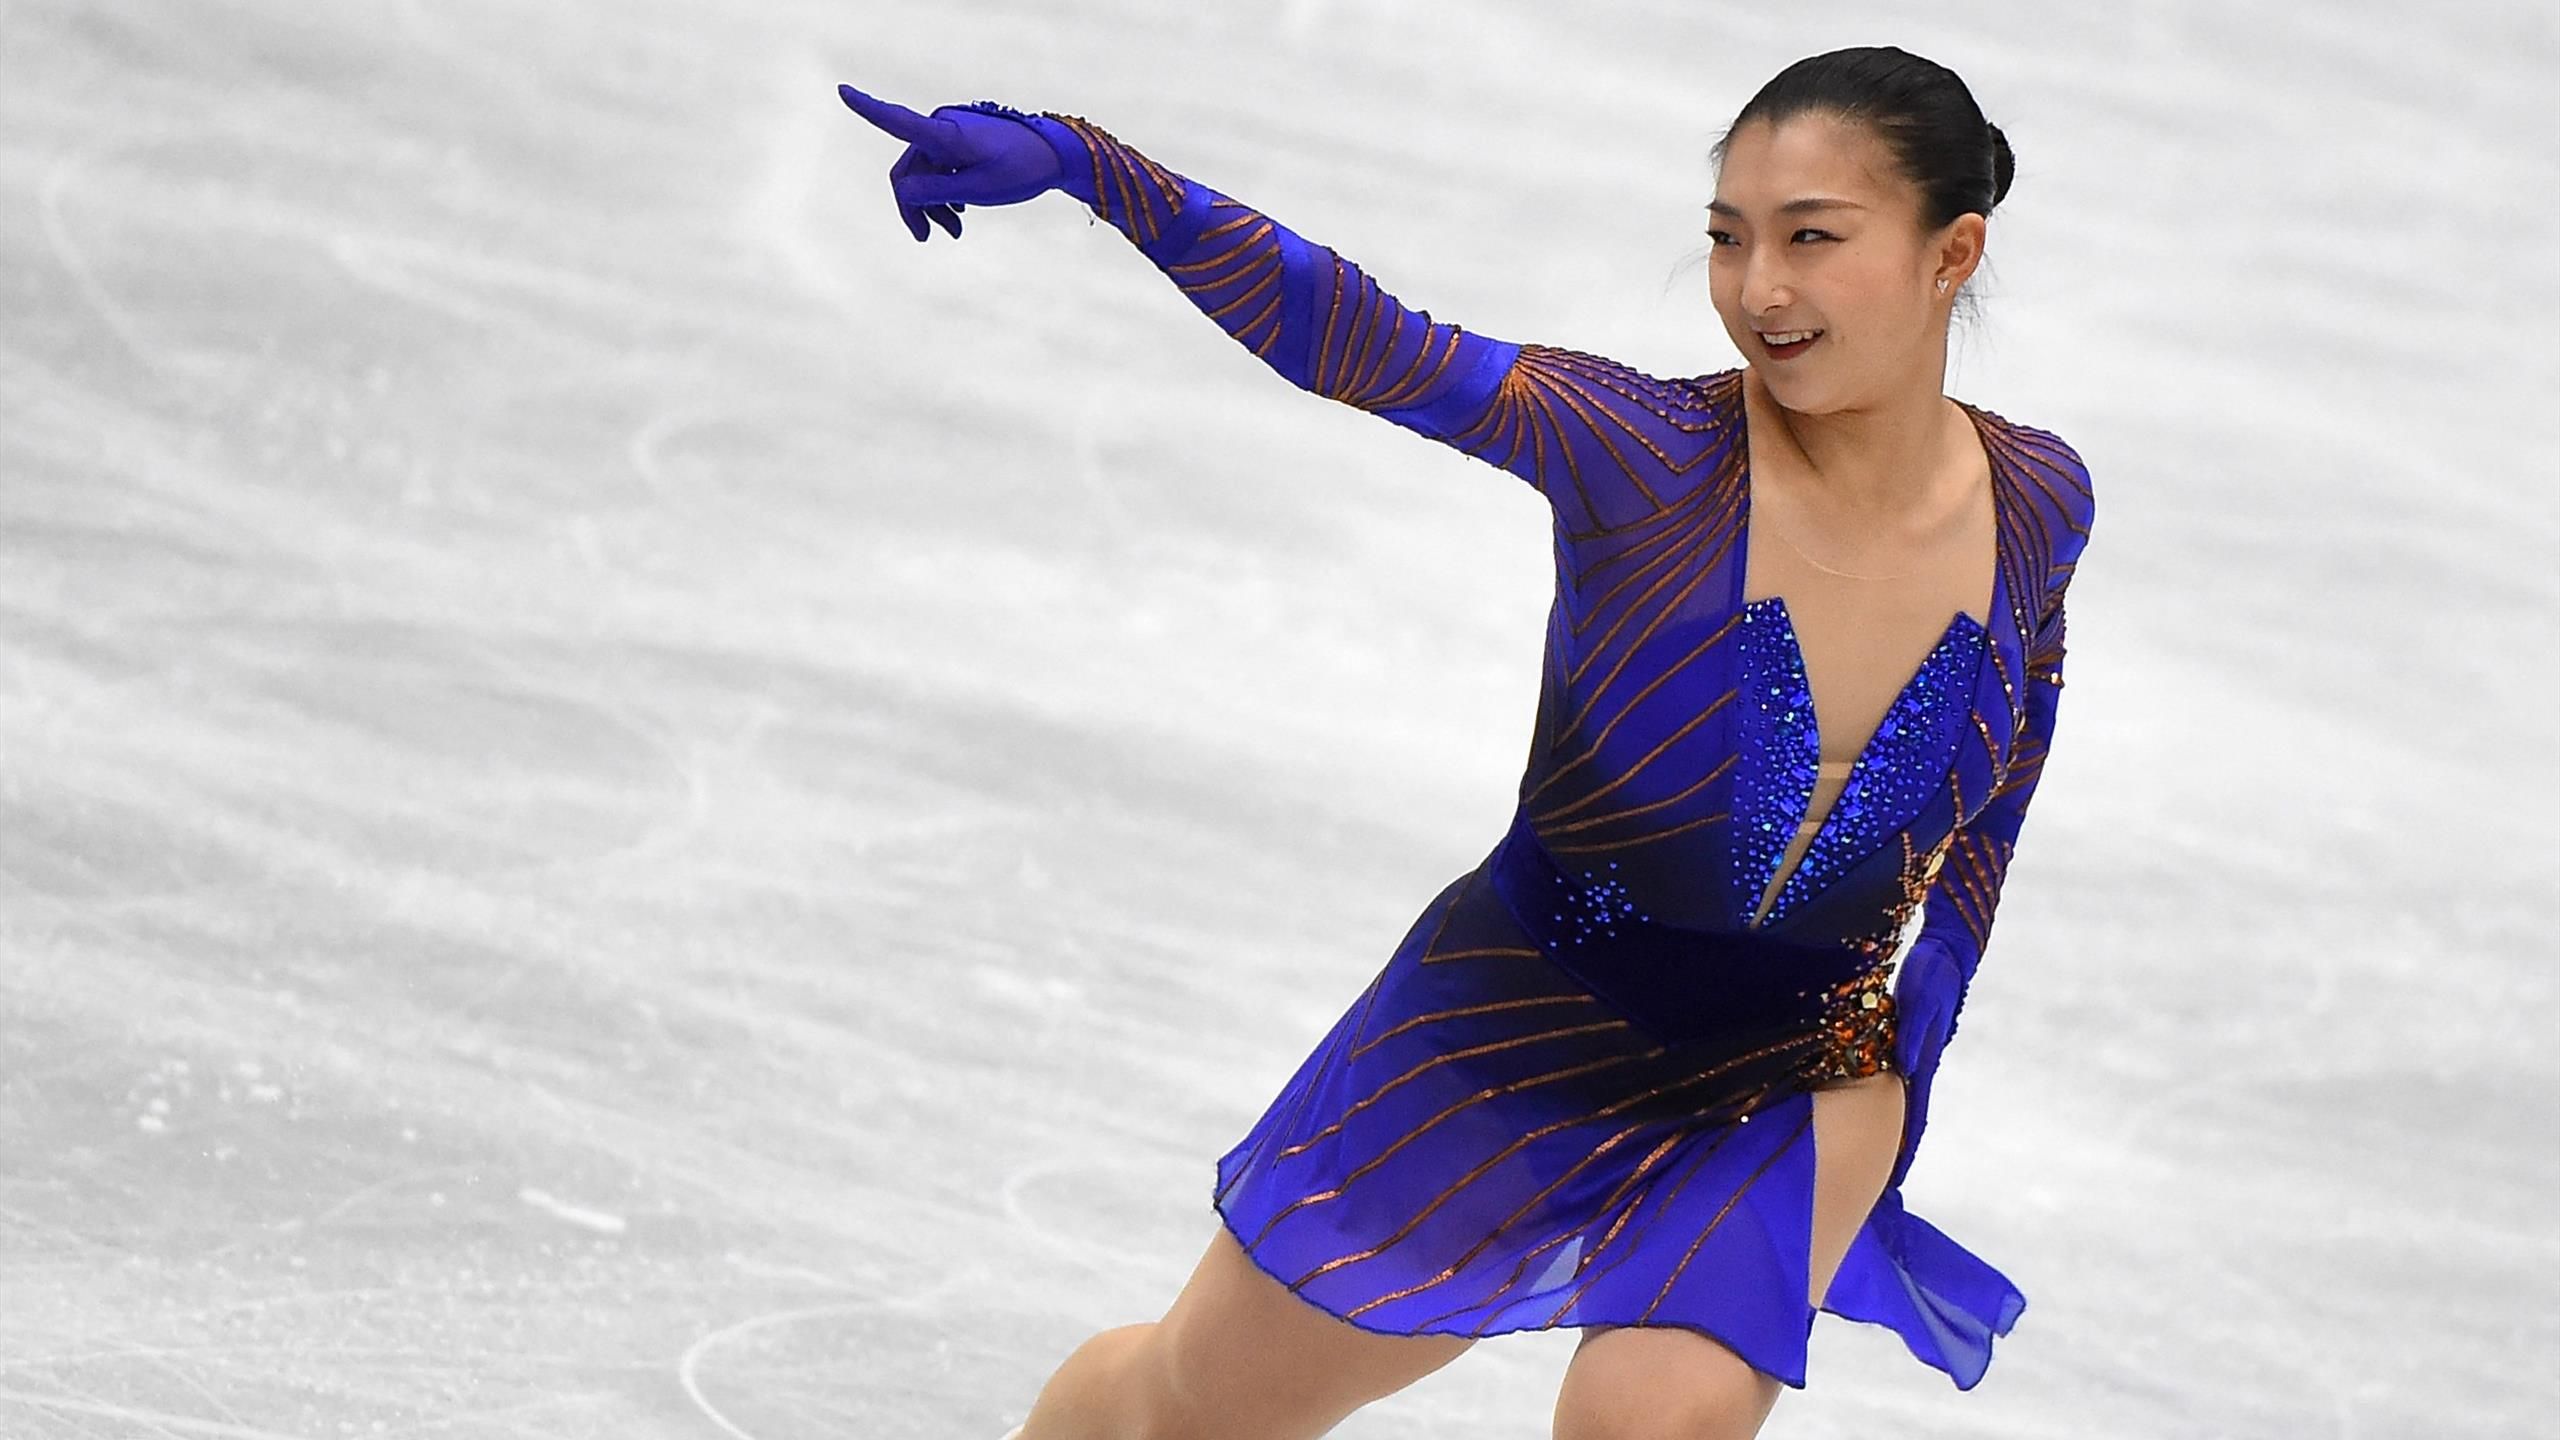 Kaori Sakamoto comprehensively wins world title at ISU World Figure